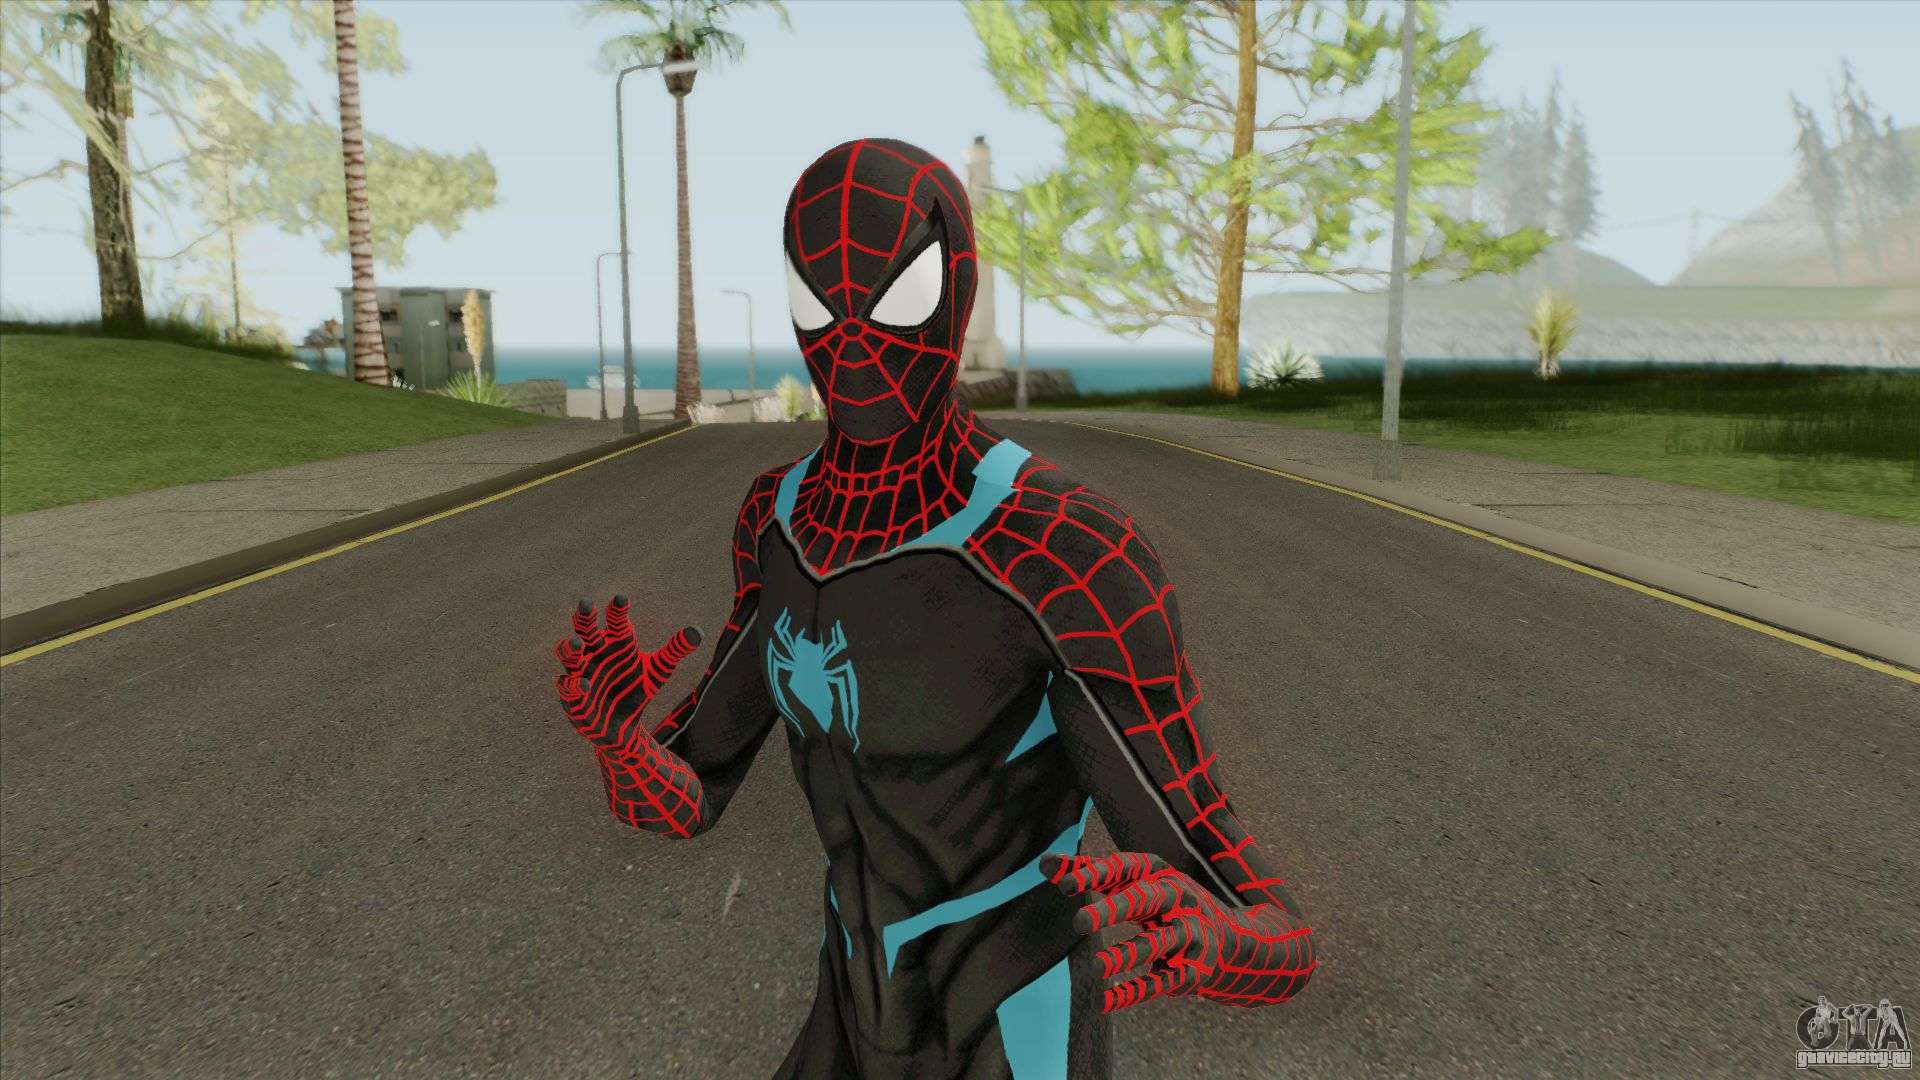 Spider-Man (Secret War Suit) для GTA San Andreas